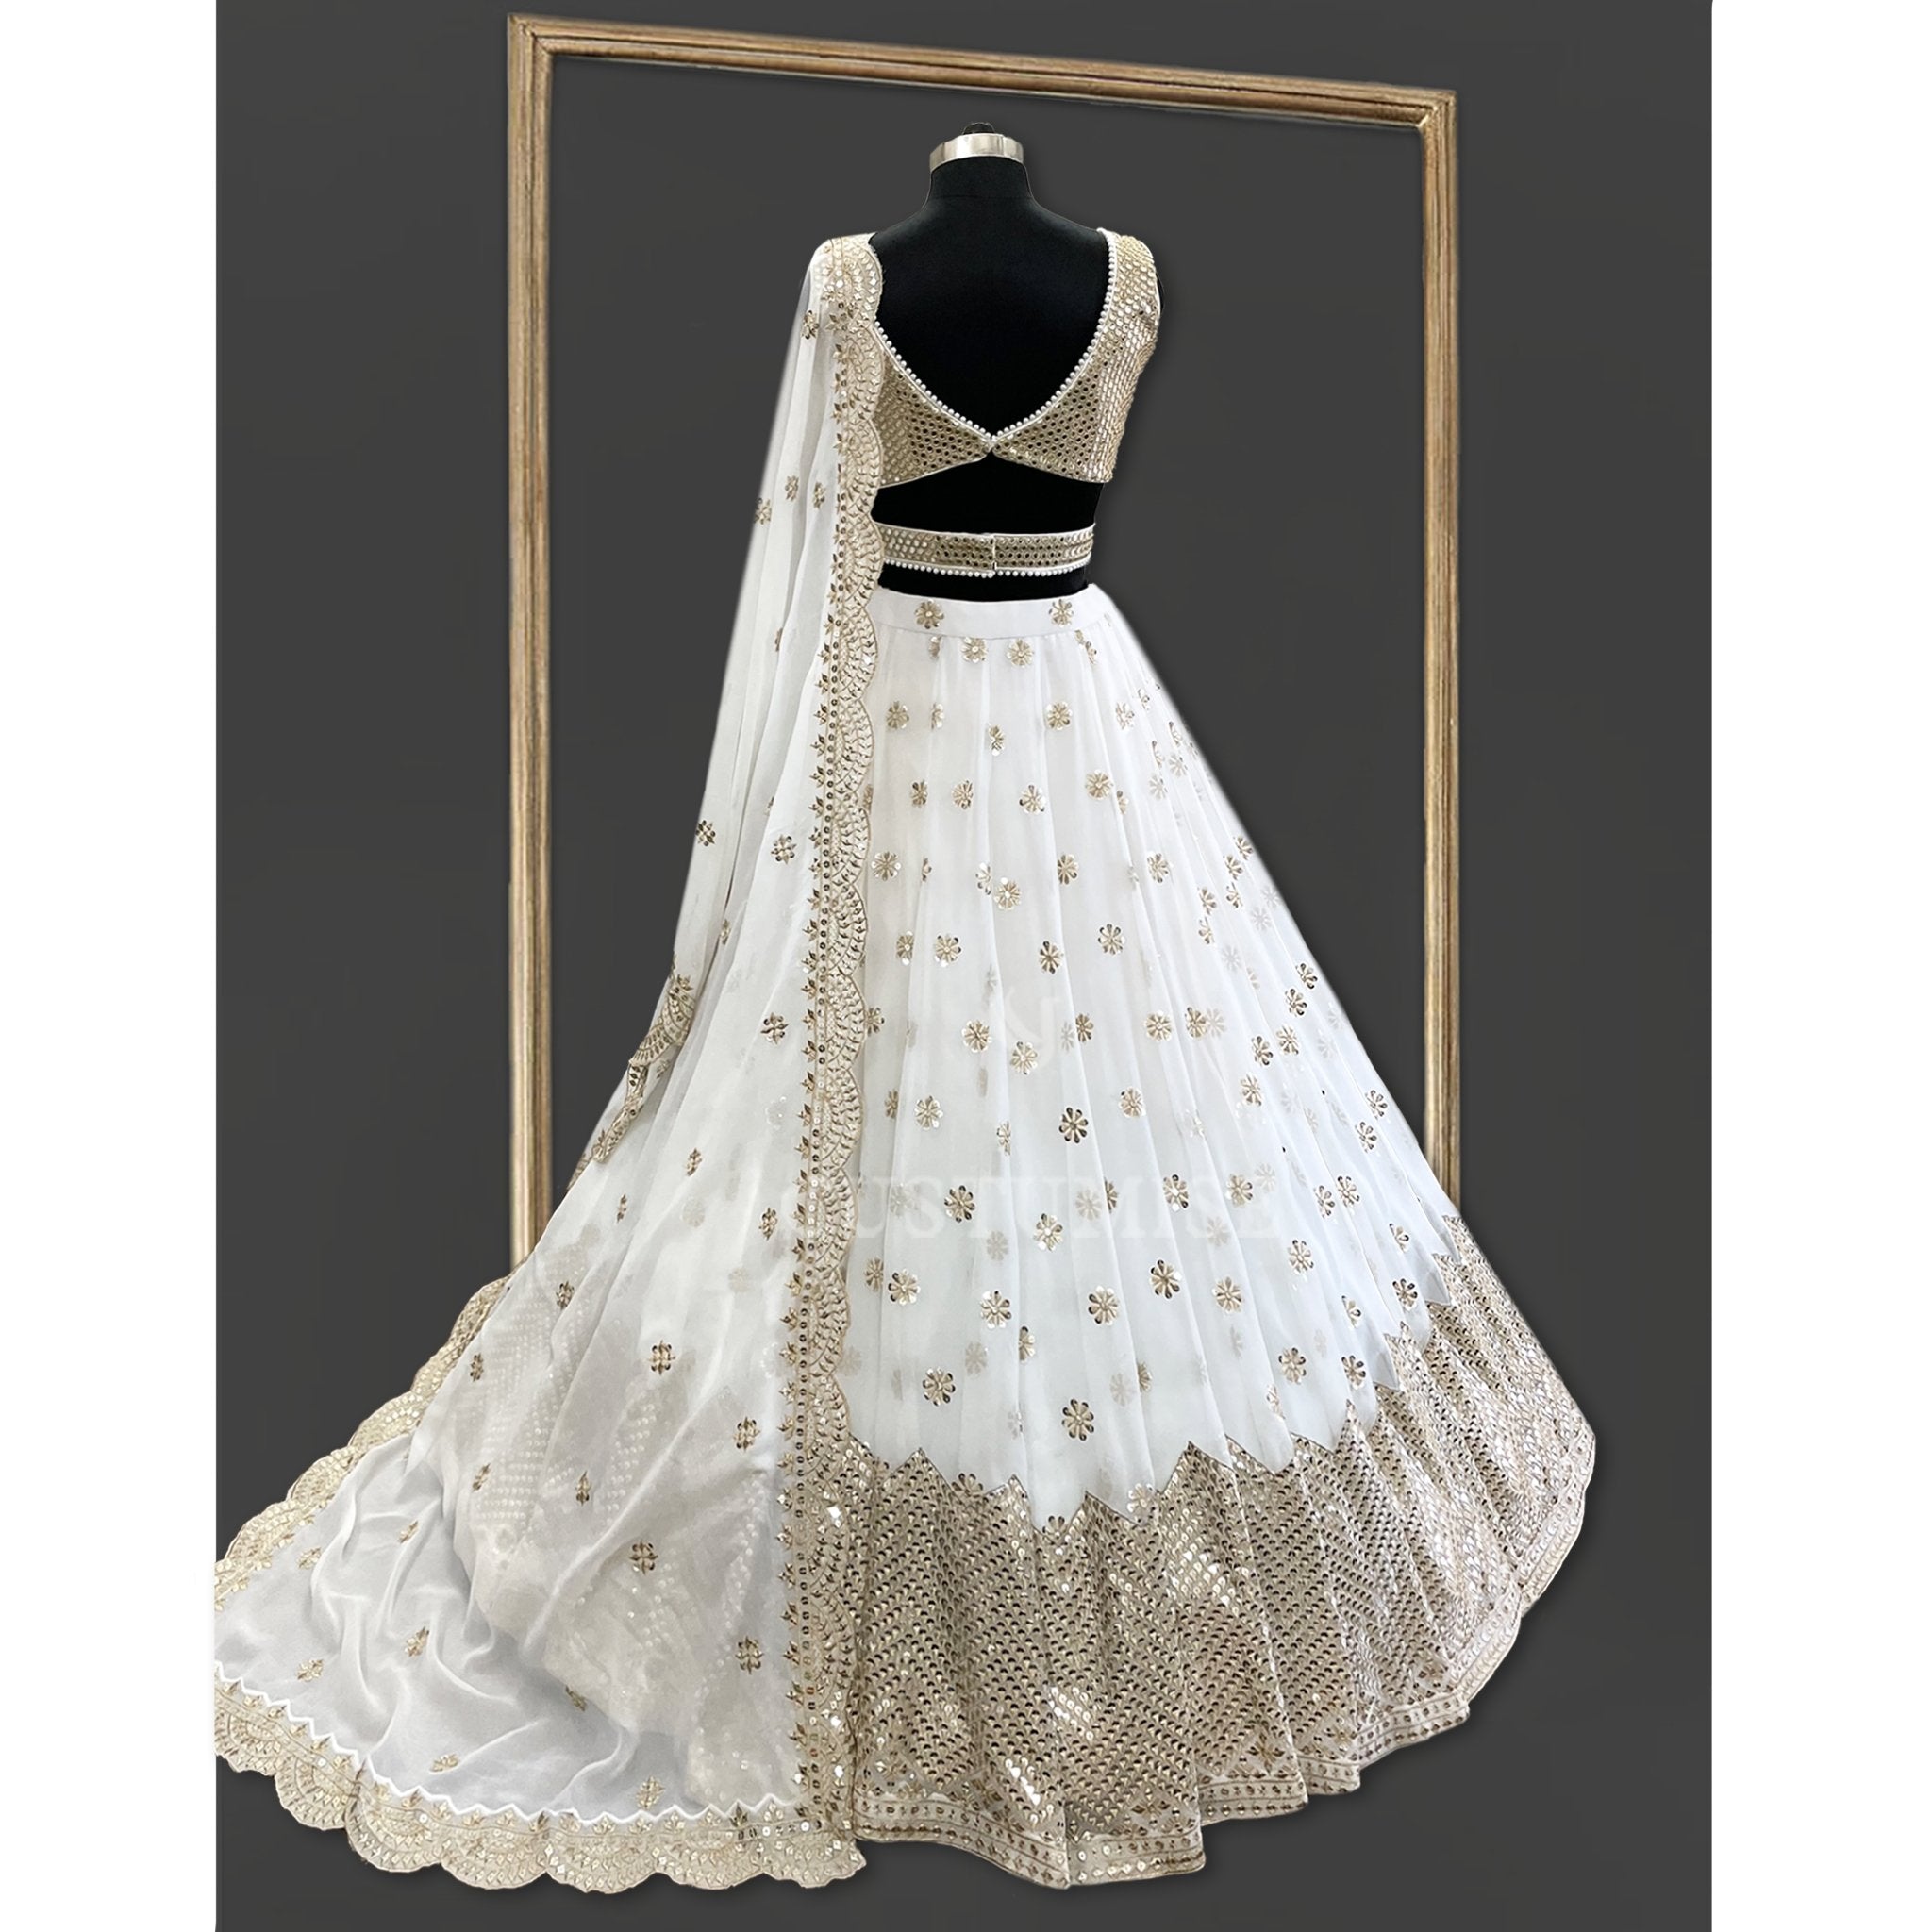 Stunning White and Gold Lehenga - Indian Designer Bridal Wedding Outfit